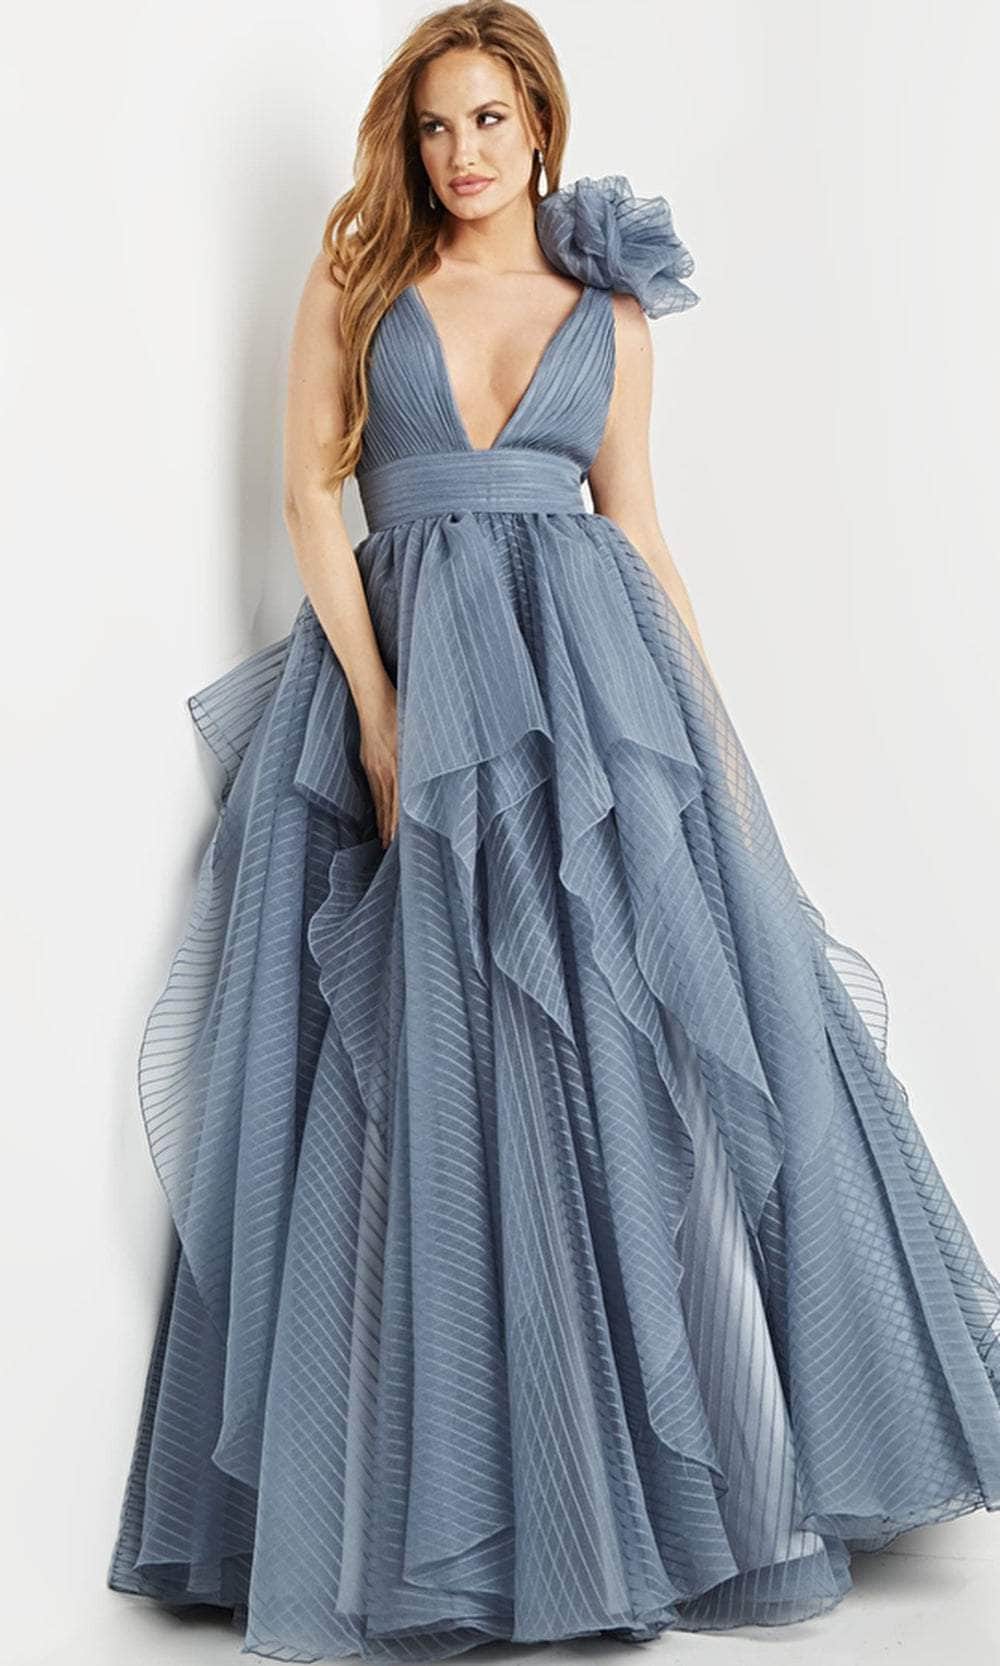 Jovani 55210 - Sleeveless Empire Ballgown Ballgown Dresses 00 / Grey/Blue